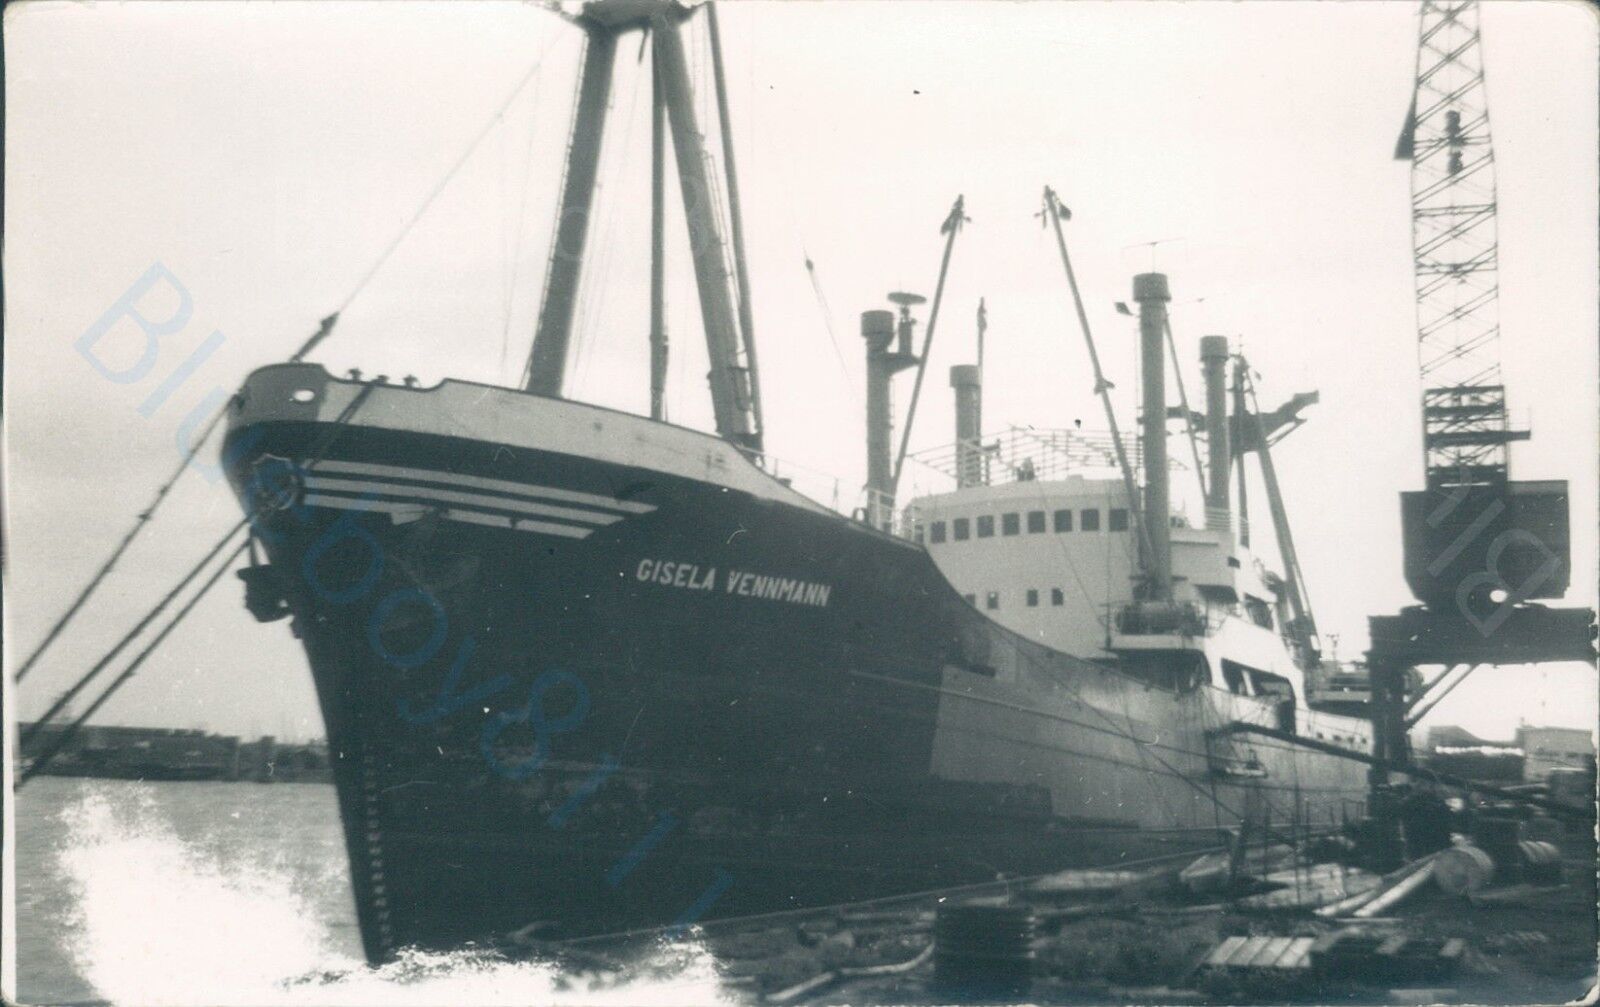 Ms Gisela Vennmann ship photo